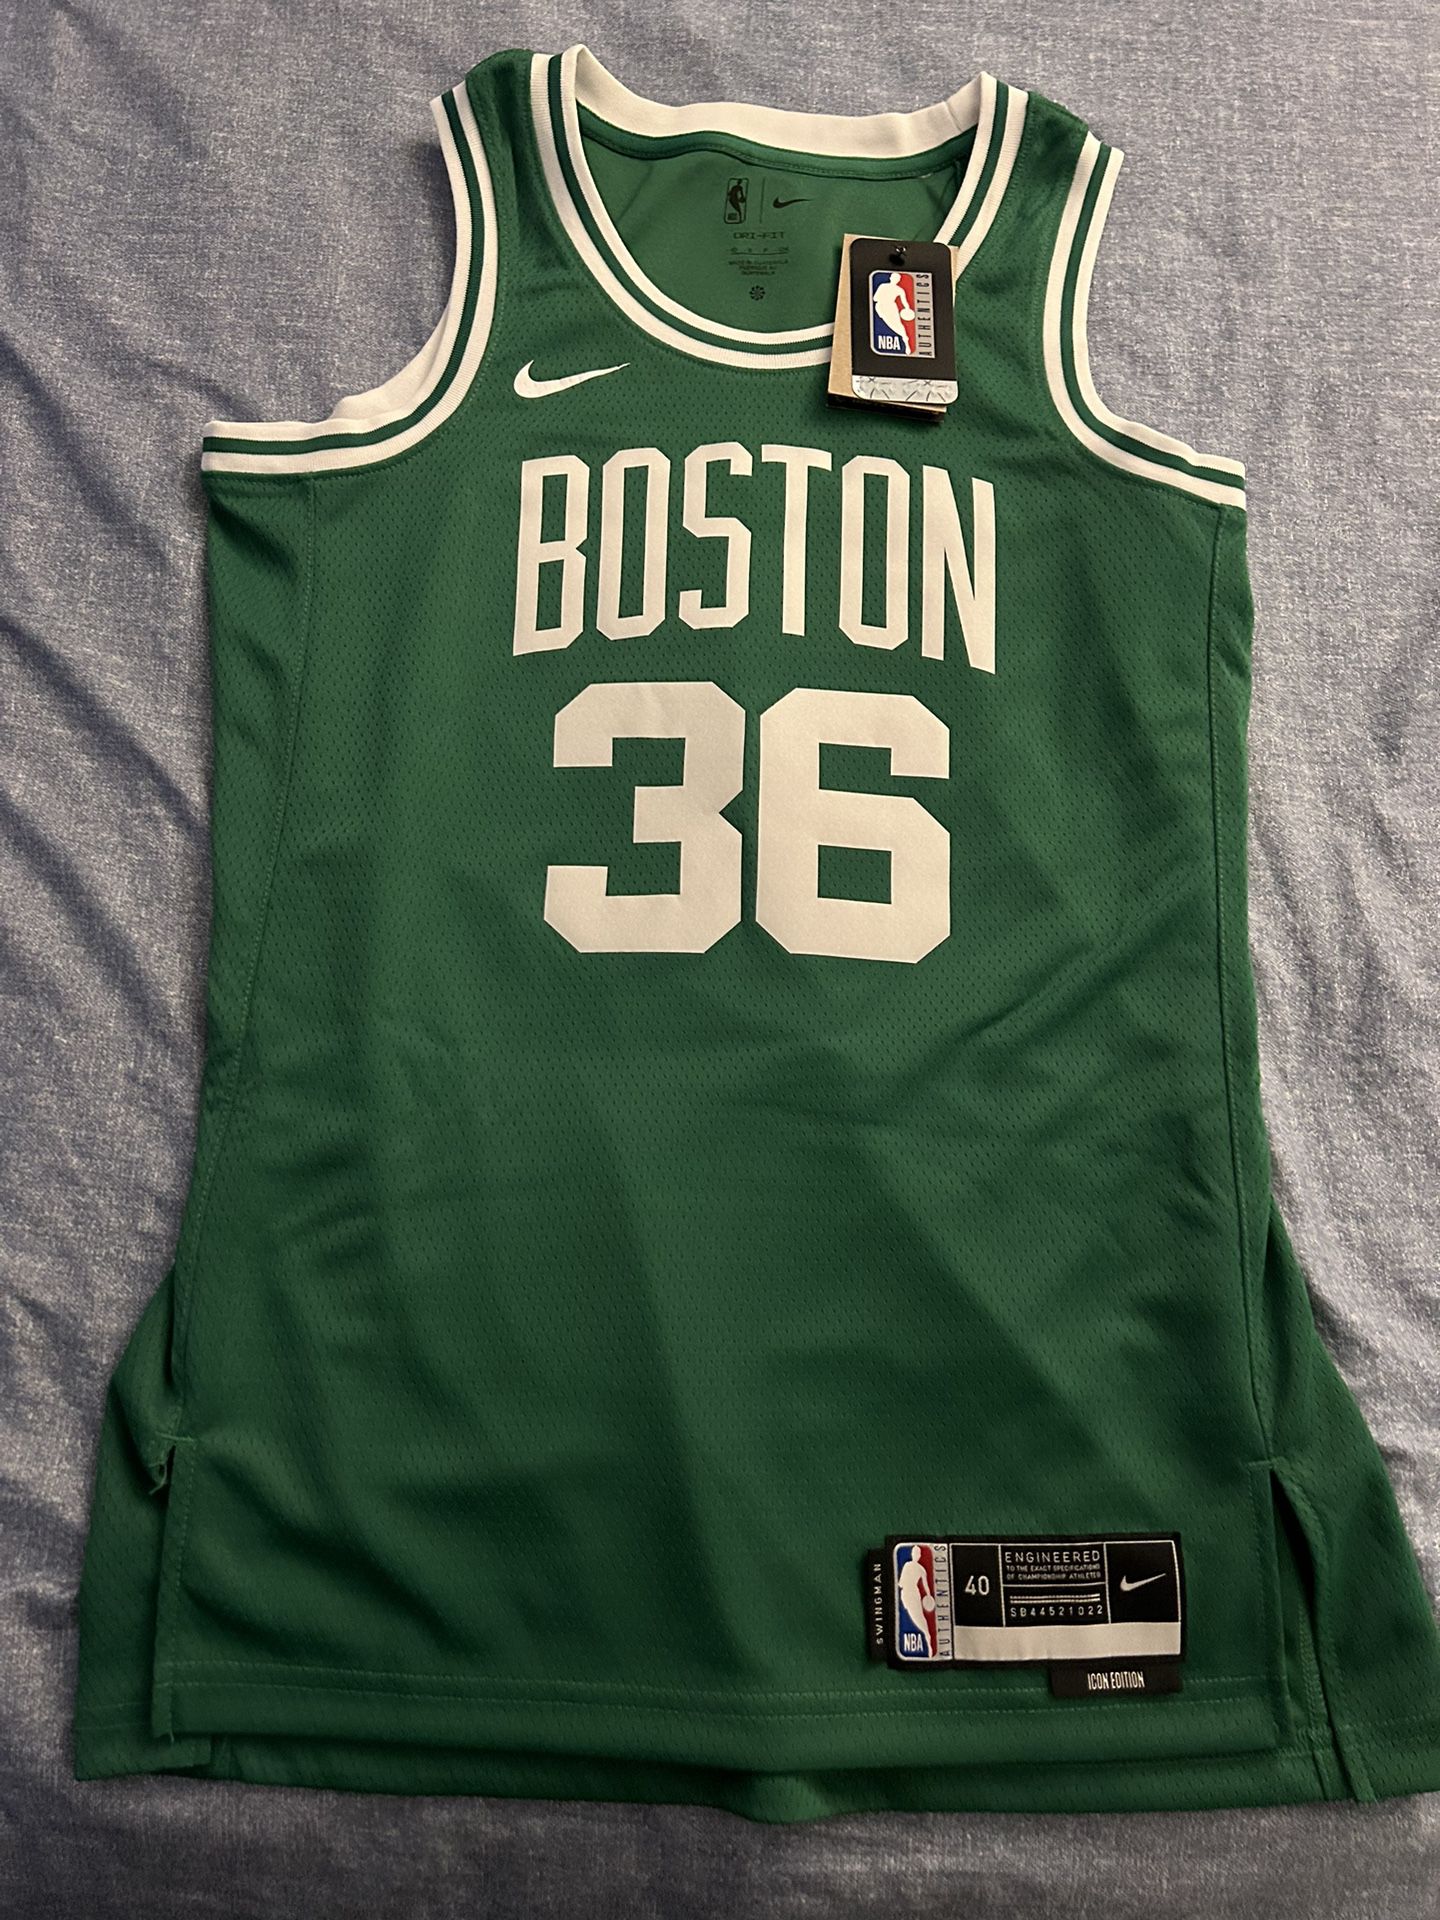 Celtics Jersey New 